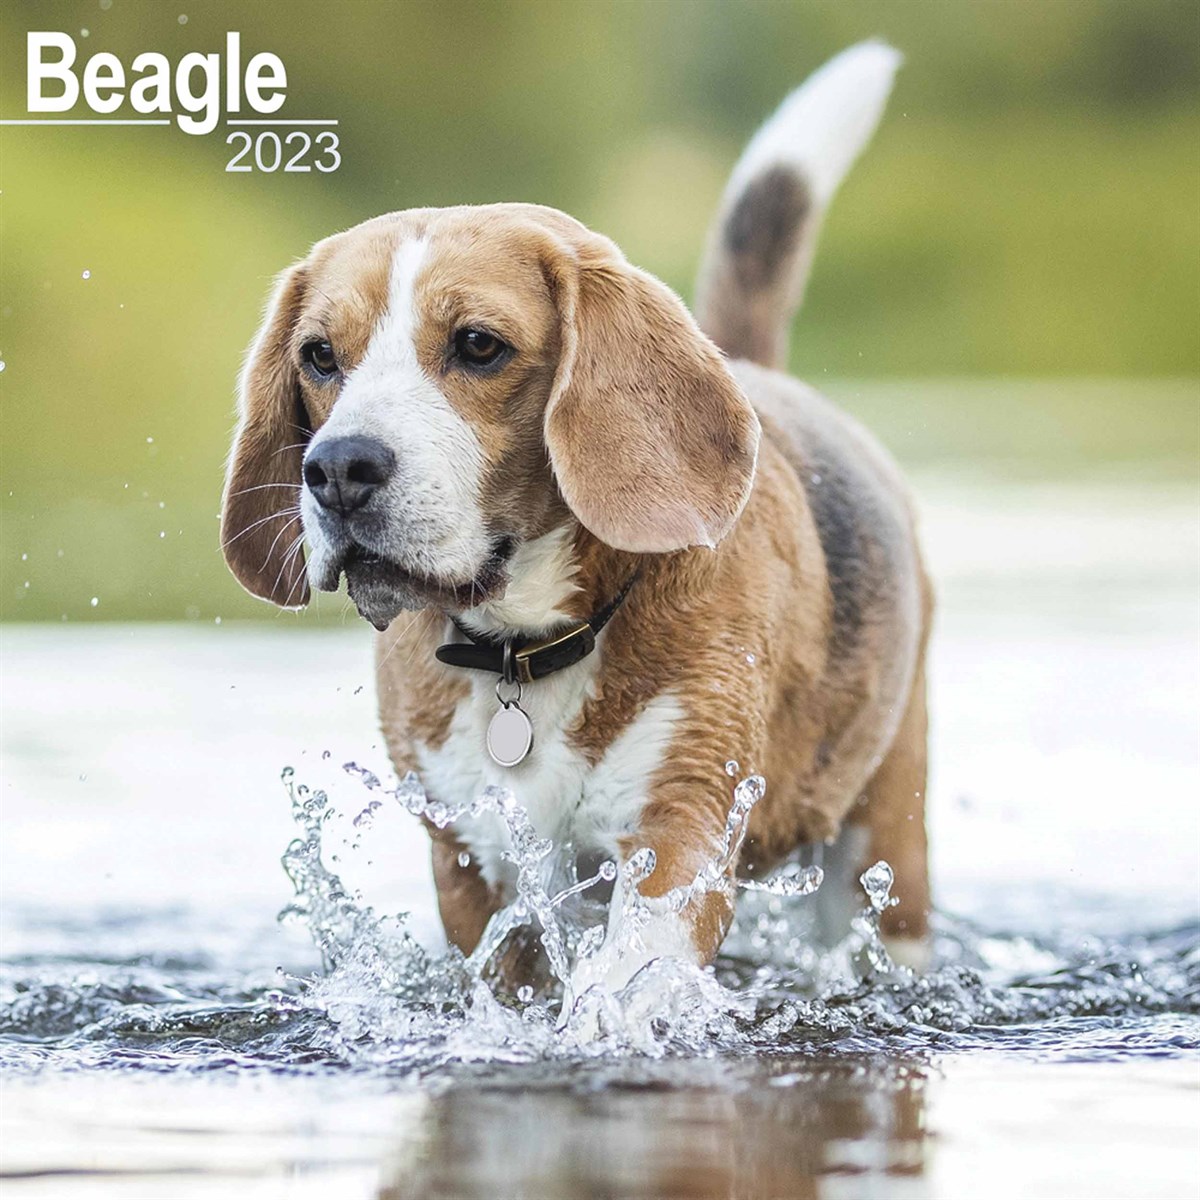 Beagle 2023 Calendars